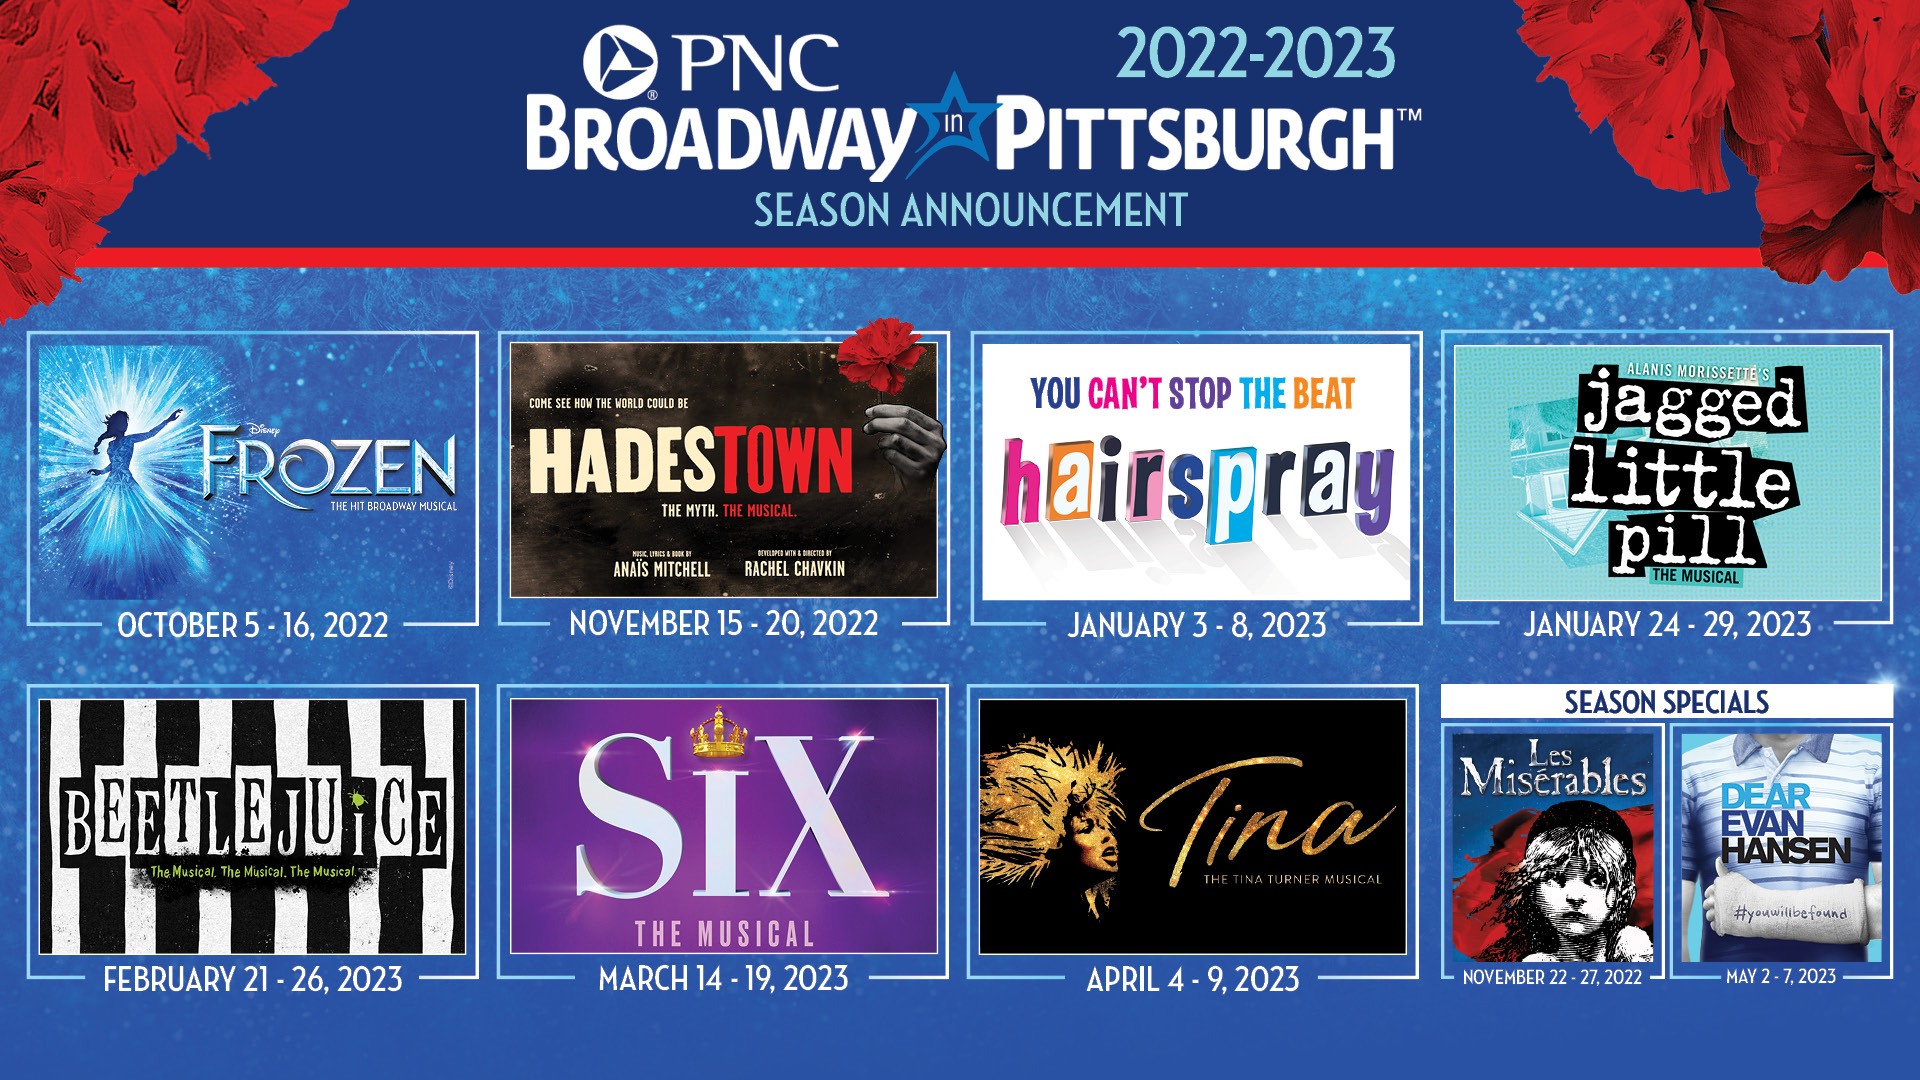 PNC Broadway in Pittsburgh season featuring Disney's Frozen, Hadestown, Hairspray, Jagged Little Pill, Beetlejuice, Six, Tina, Les Miserables, and Dear Evan Hansen